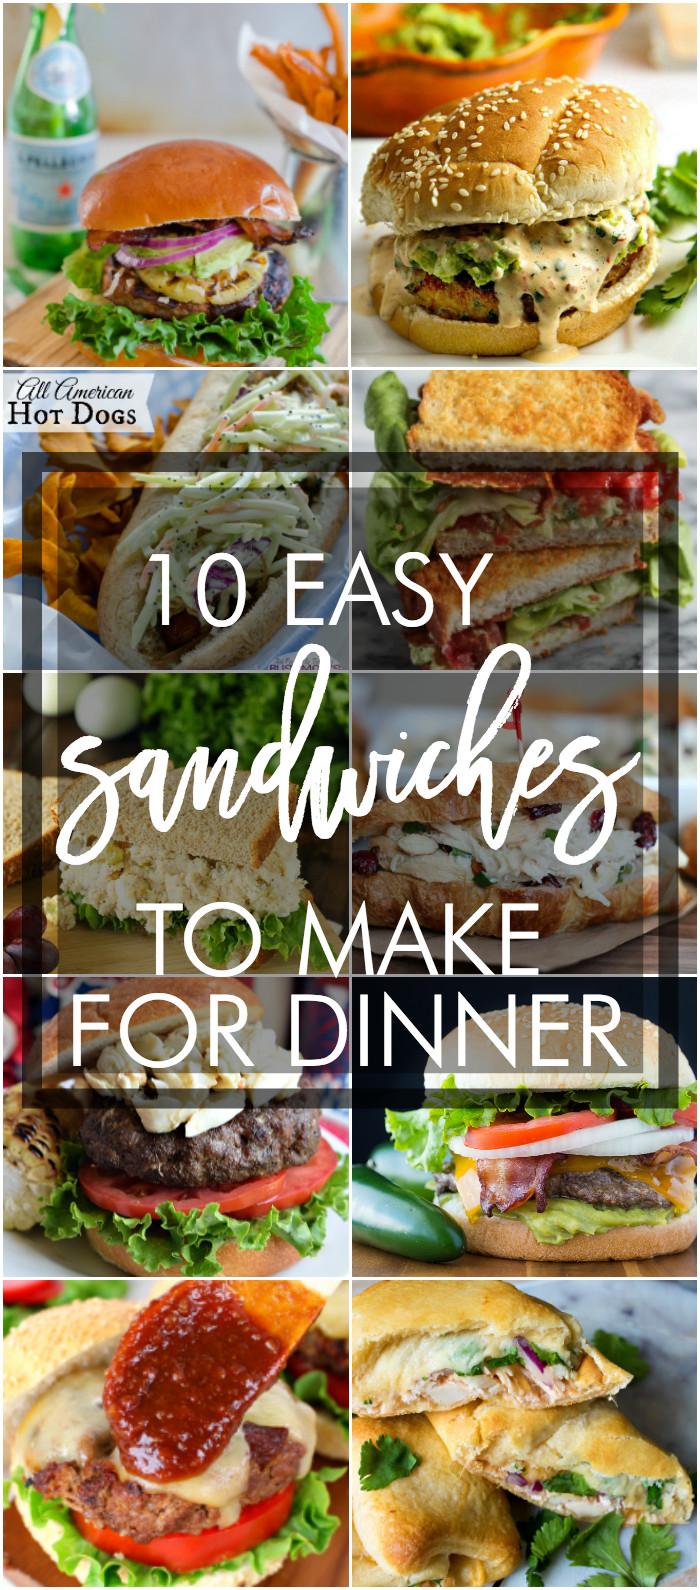 Easy Food To Make For Dinner
 10 Easy Sandwich Recipes to Make for Dinner